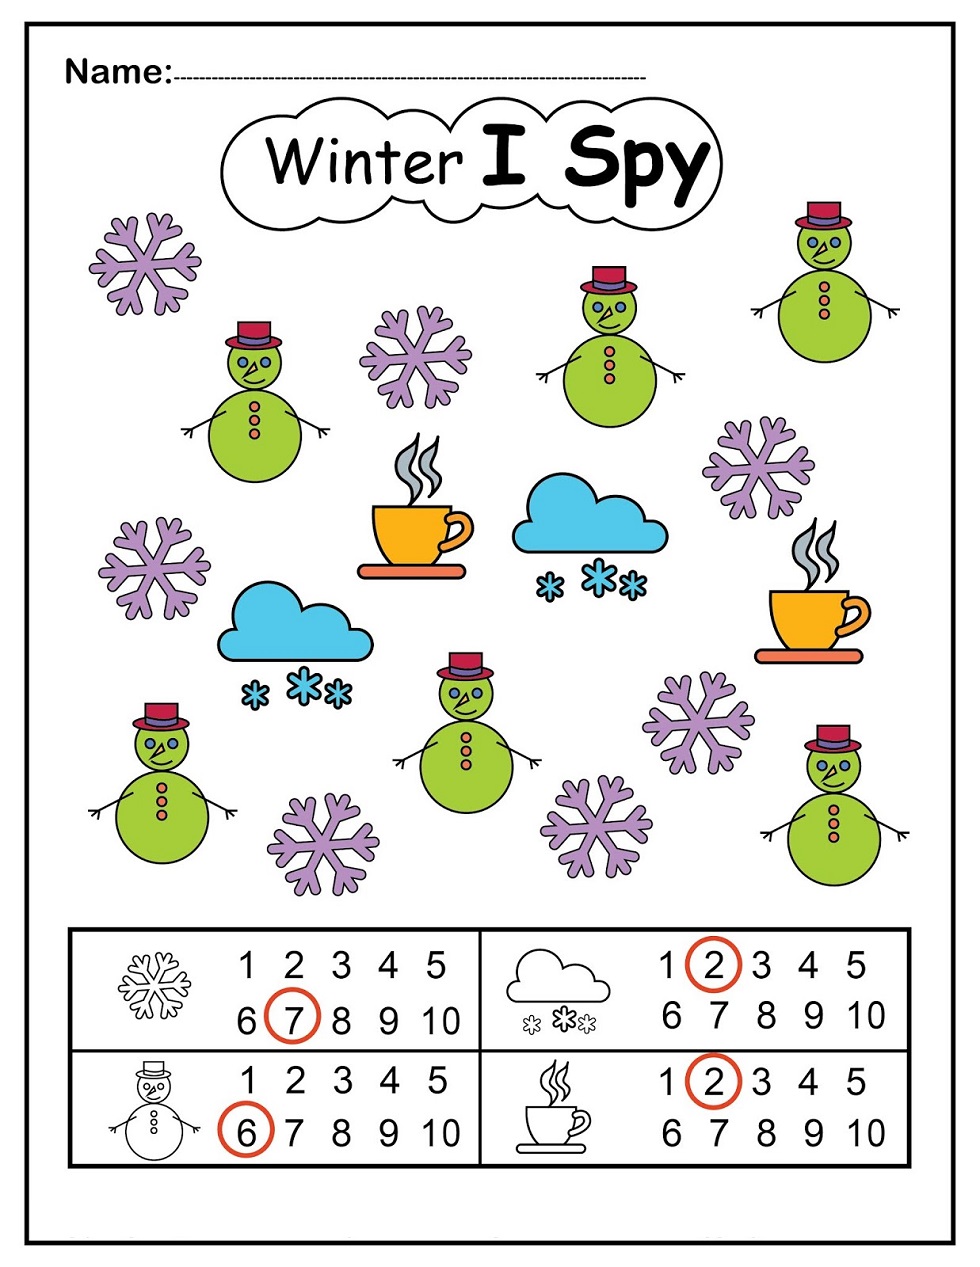 Printable Winter I Spy Image